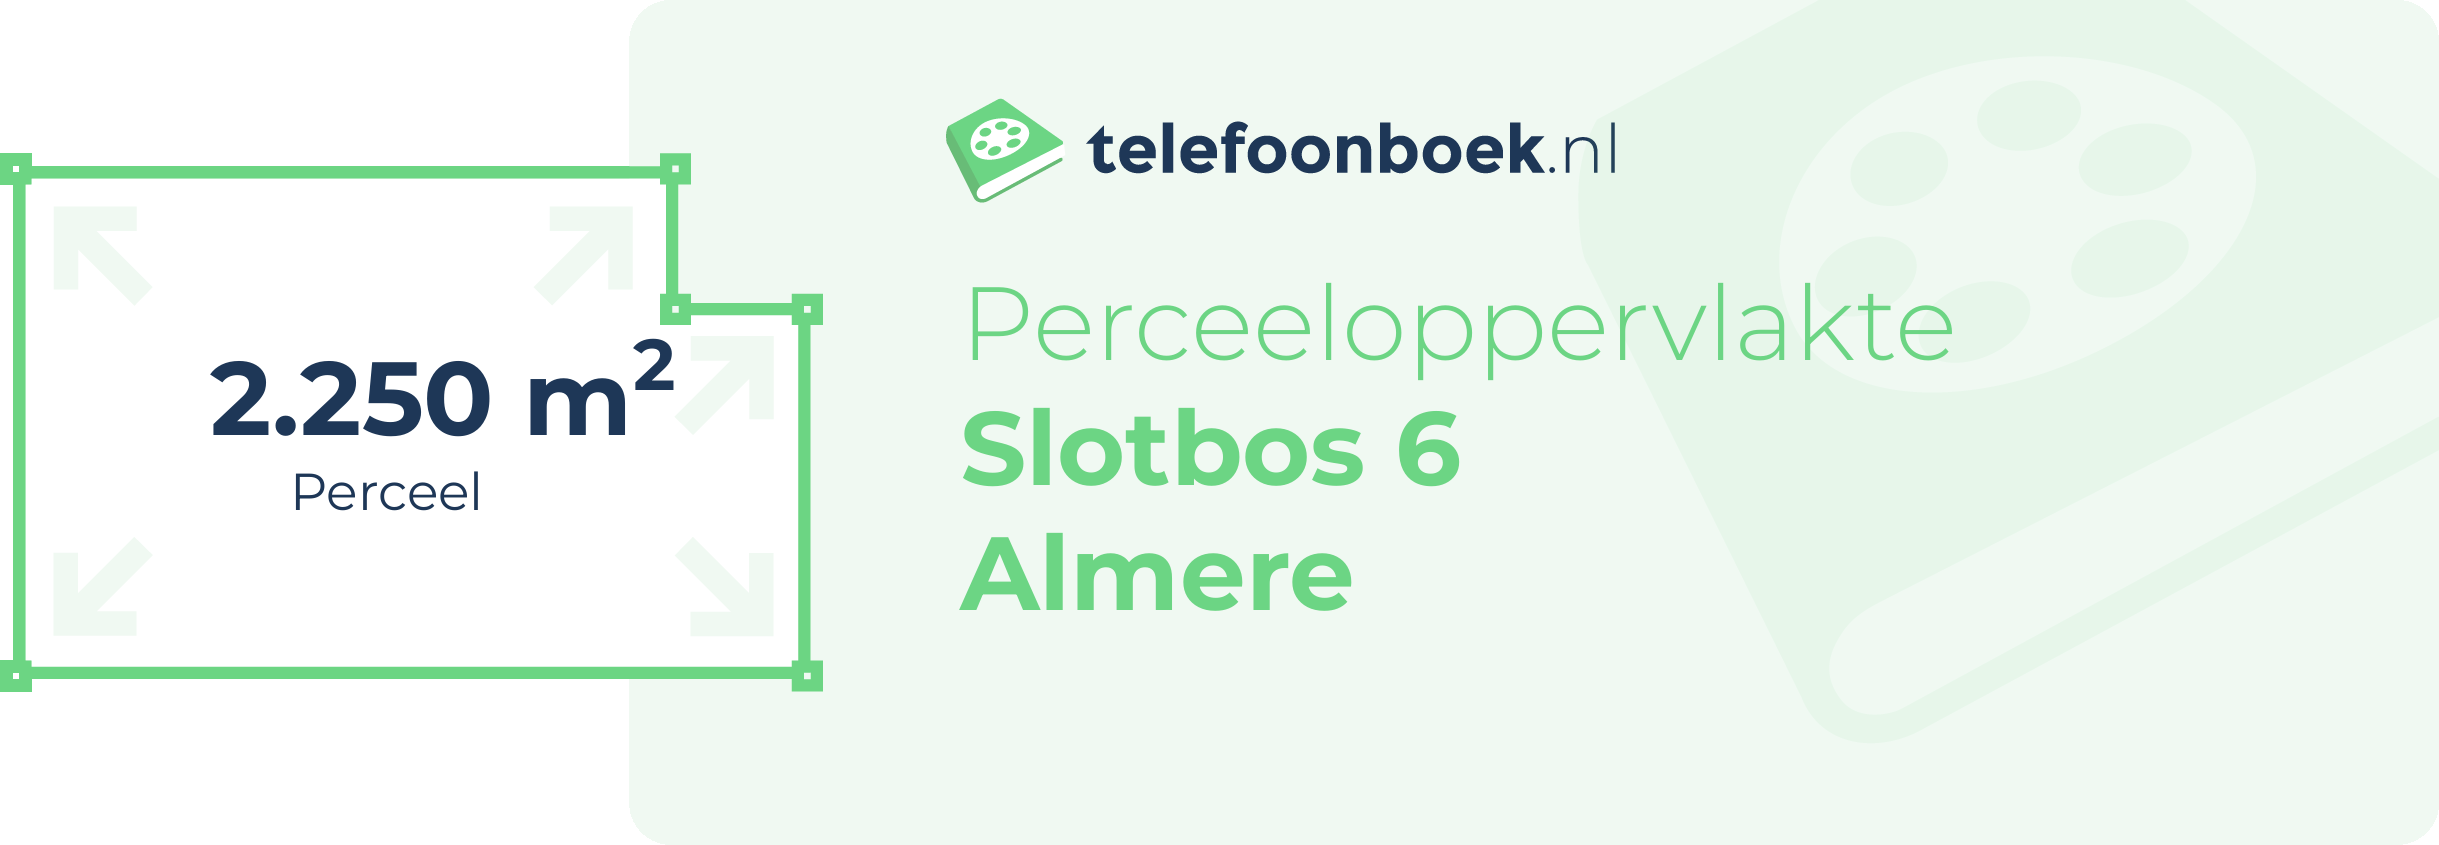 Perceeloppervlakte Slotbos 6 Almere